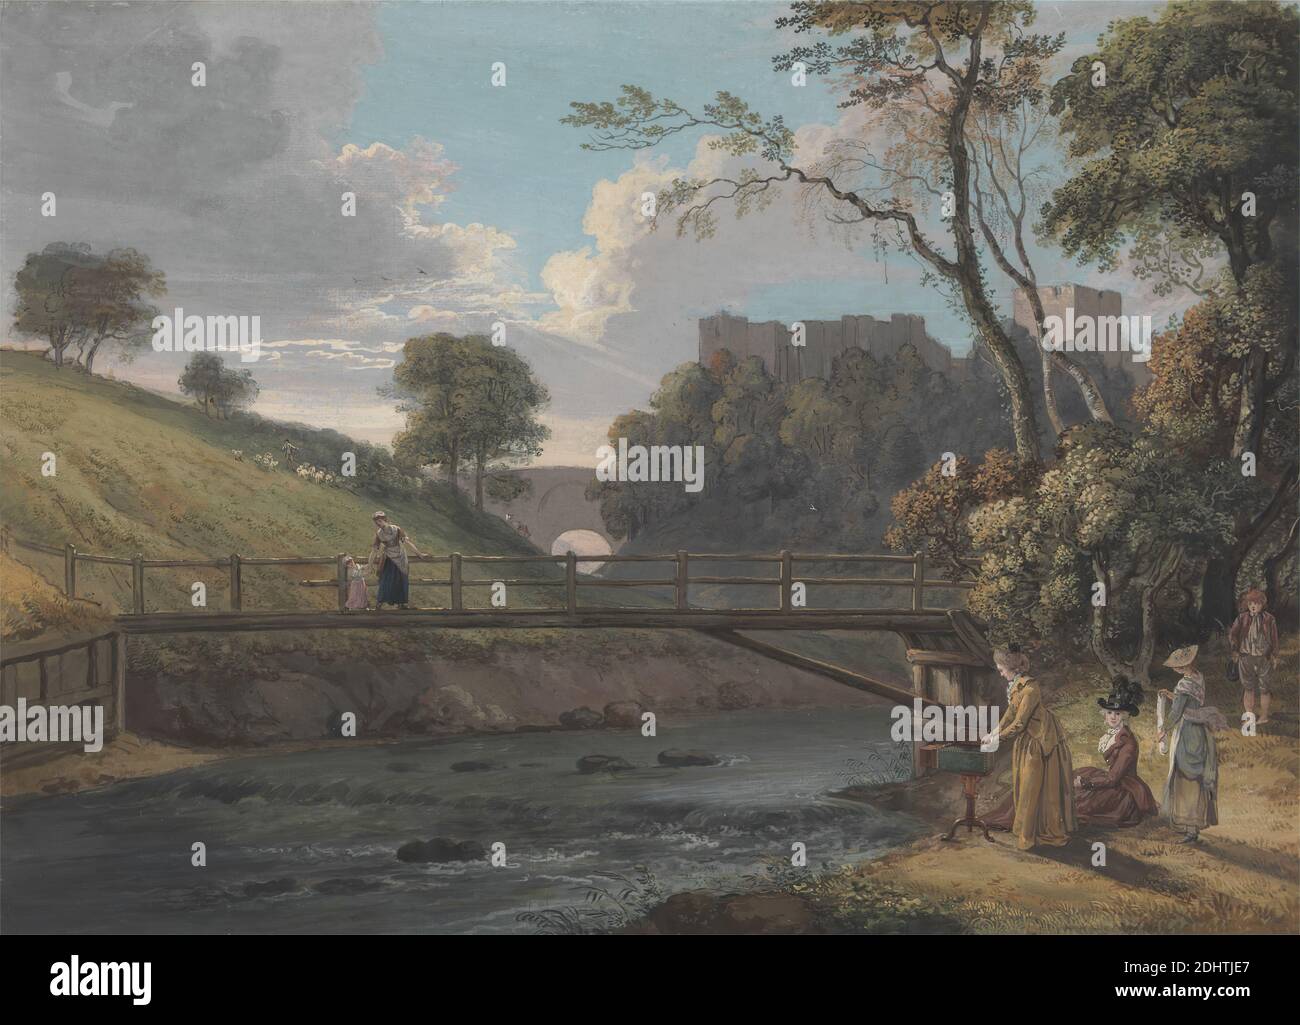 Roslin Castle, Midlothian, Paul Sandby RA, 1731–1809, British, ca. 1780, Gouache on medium laid paper, mounted on board, Sheet: 18 1/8 x 25 1/8 inches (46 x 63.8 cm) and Mount: 18 1/8 x 15 1/8 inches (46 x 38.4 cm), amateur, artist, bridge (built work), camera obscura, castle, children, clouds, hats, hills, ladies, landscape, light, picturesque, poet, river, Scottish, sheep, shepherd, sky, trees, women, Esk, Europe, Midlothian, Roslin, Roslin castle, Scotland, United Kingdom Stock Photo